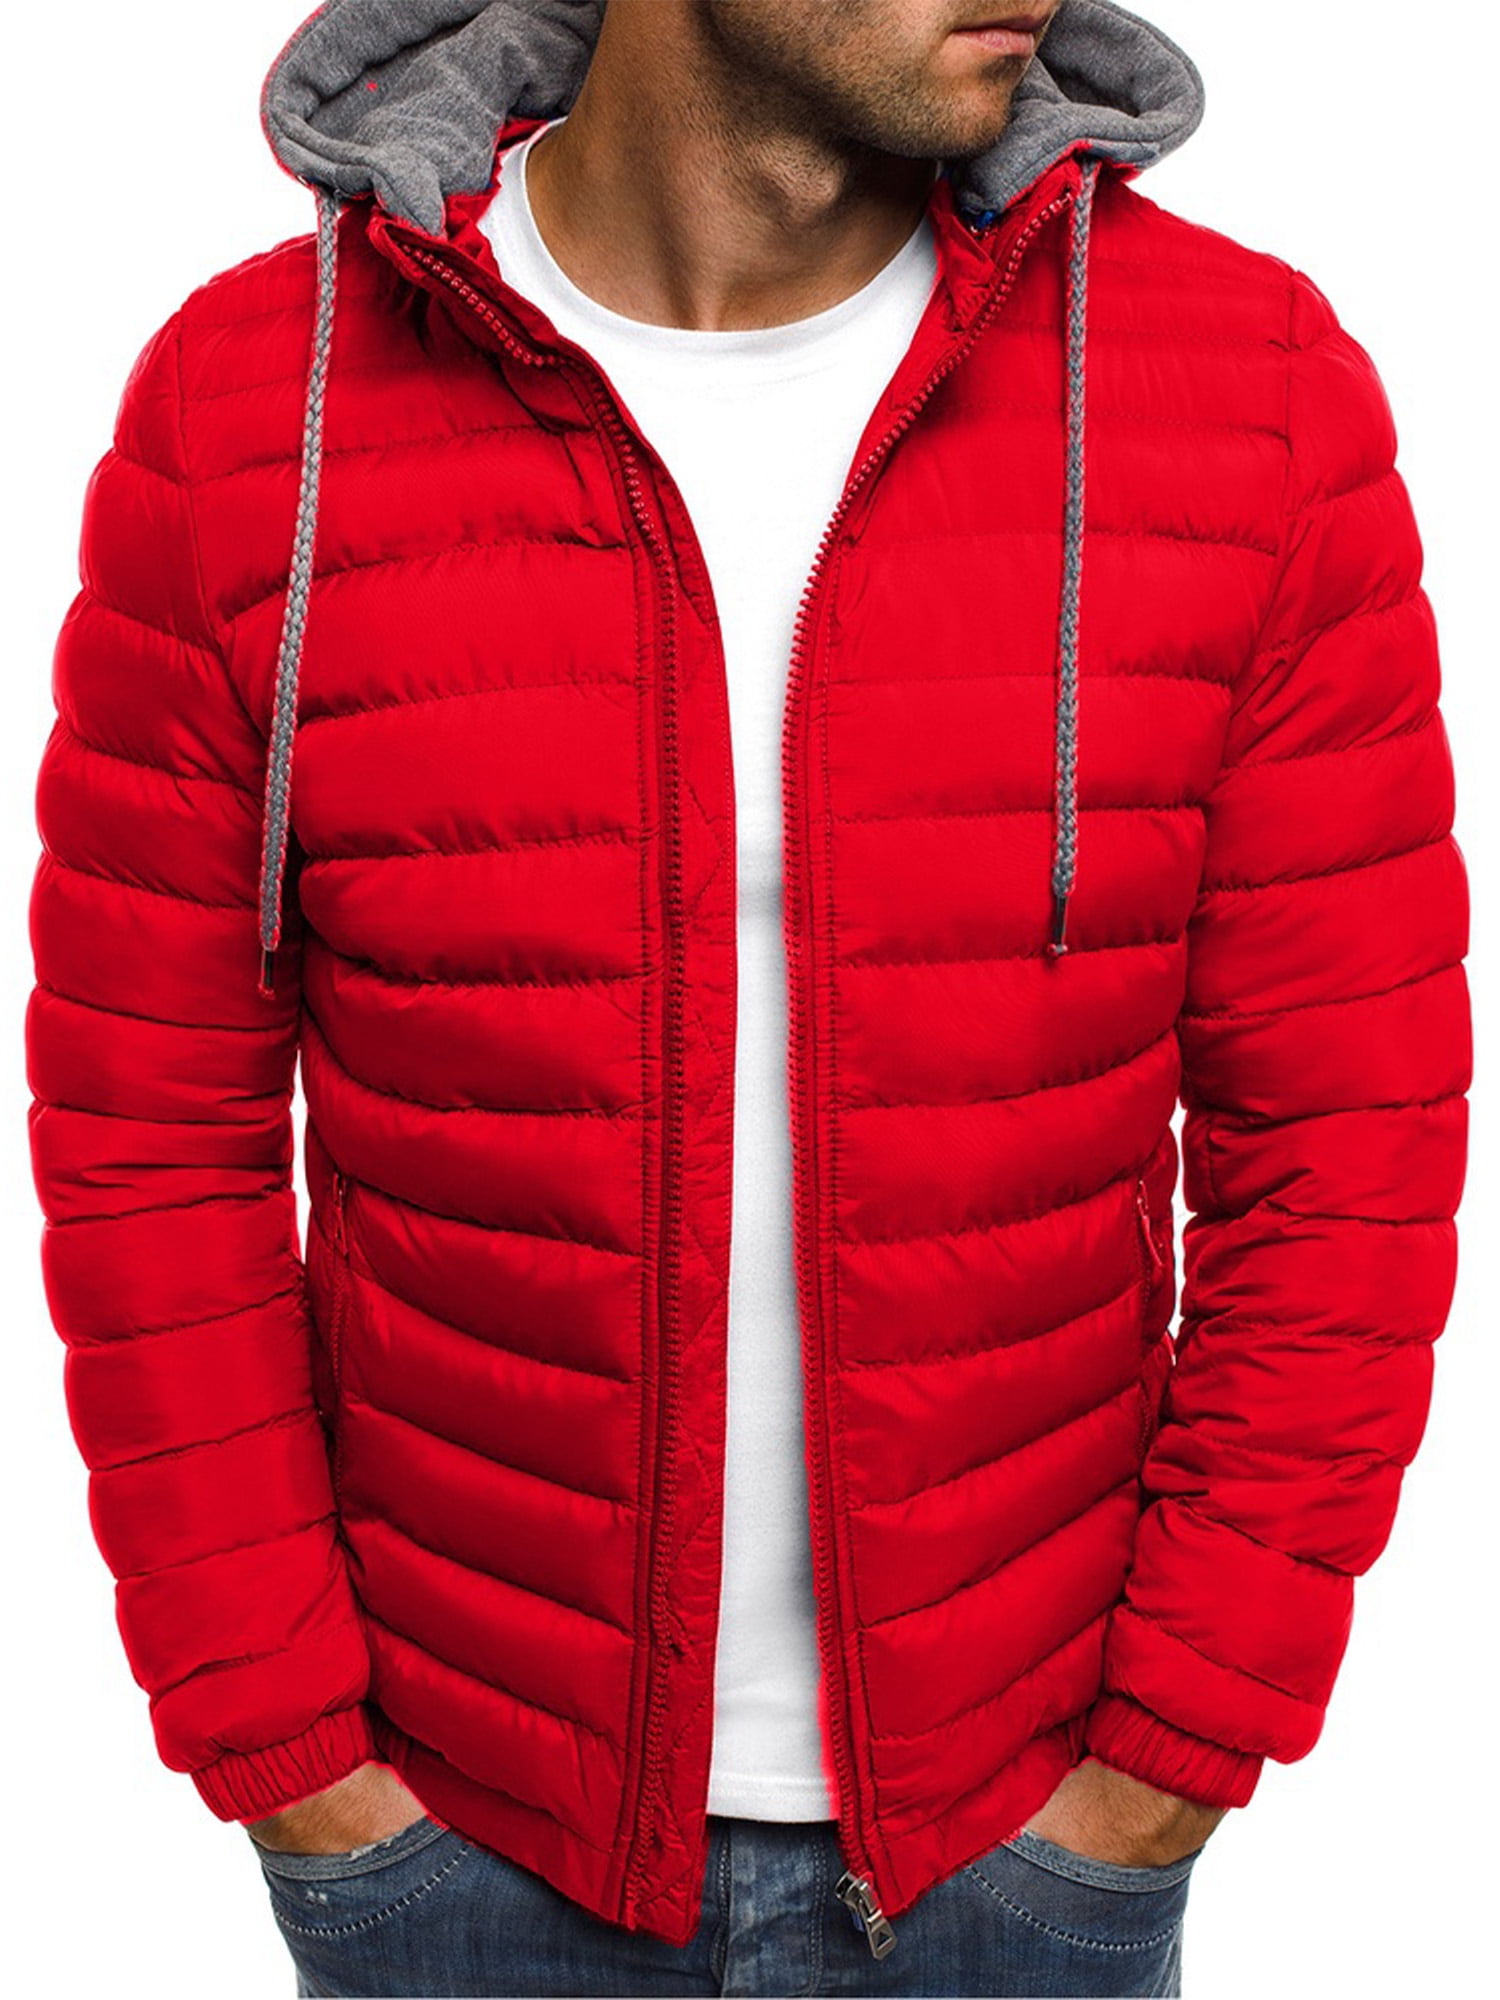 YuKaiChen Women's Ski Jacket Winter Warm Windproof Coat Fleece Hooded Snow Coat 